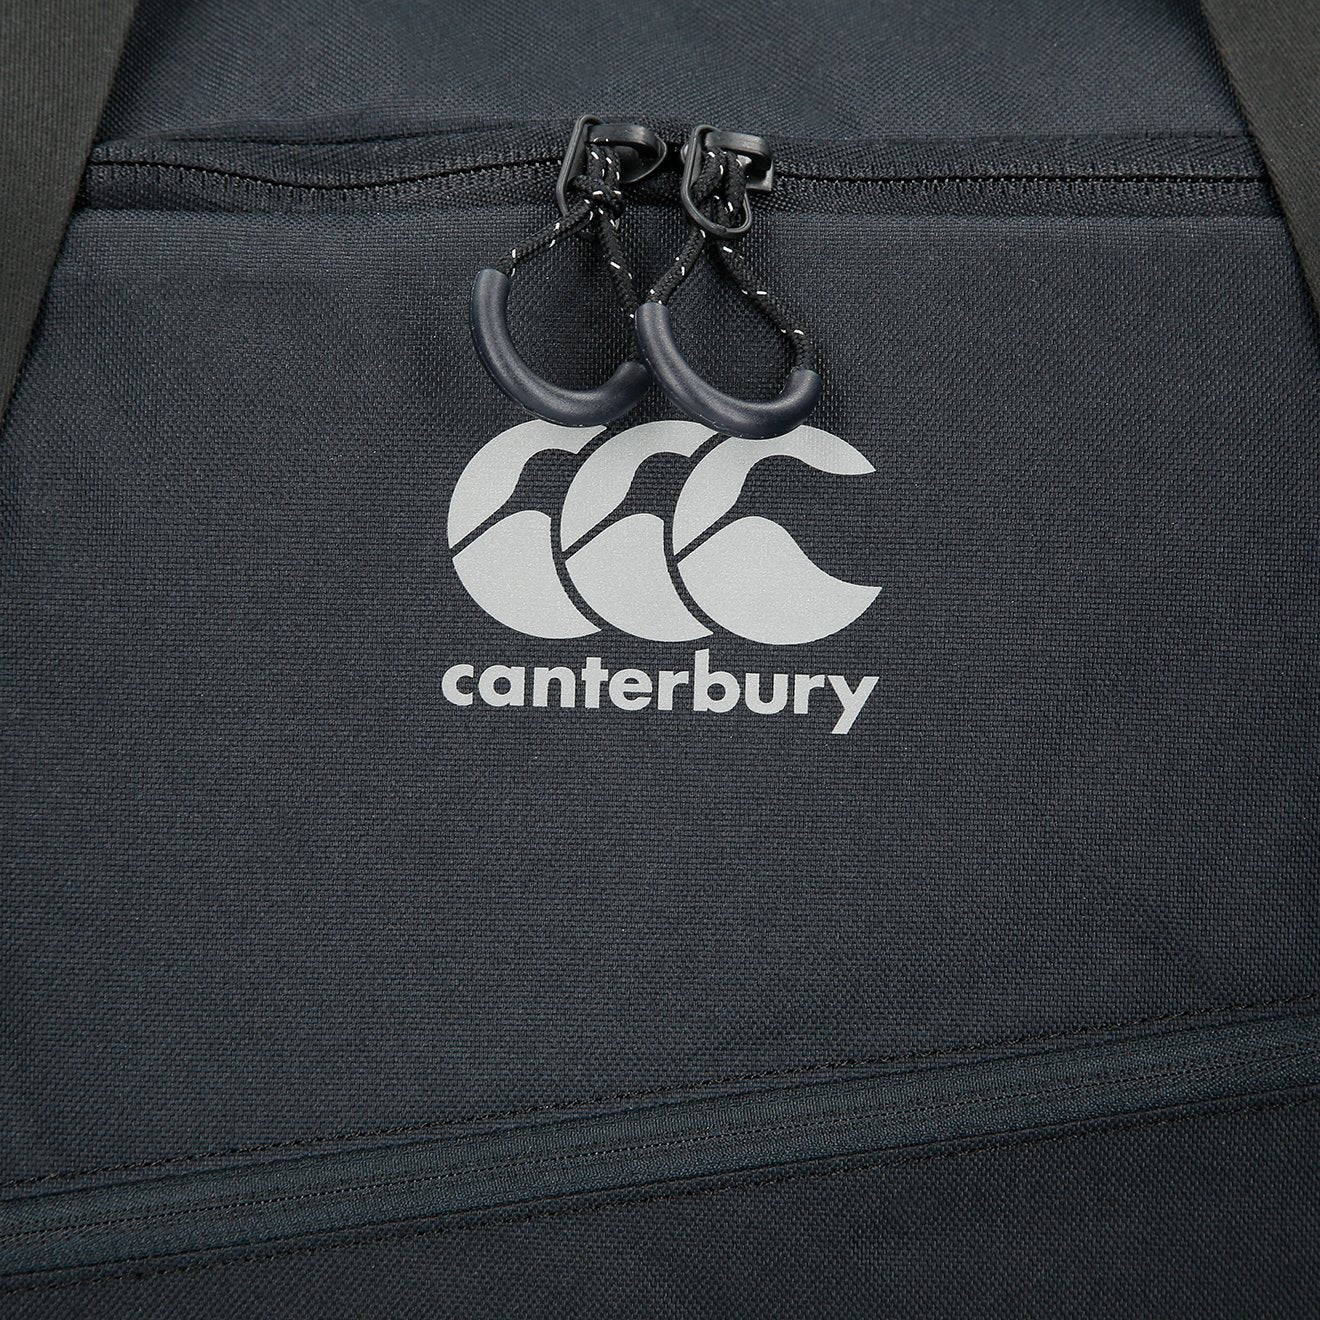 Canterbury Vaposhield Medium Sports Bag